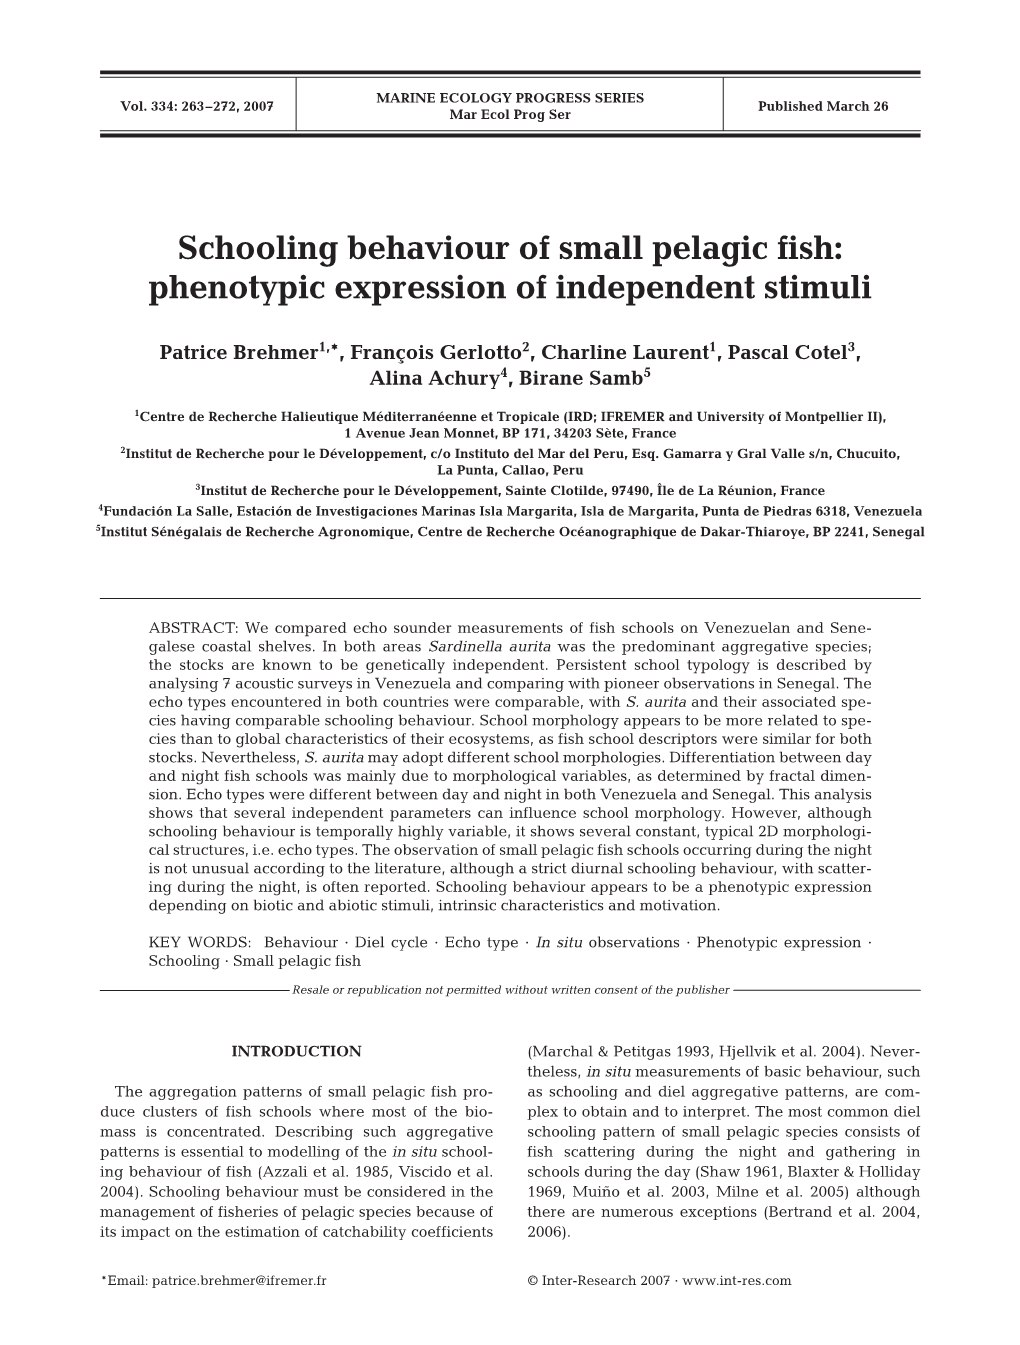 Schooling Behaviour of Small Pelagic Fish: Phenotypic Expression of Independent Stimuli